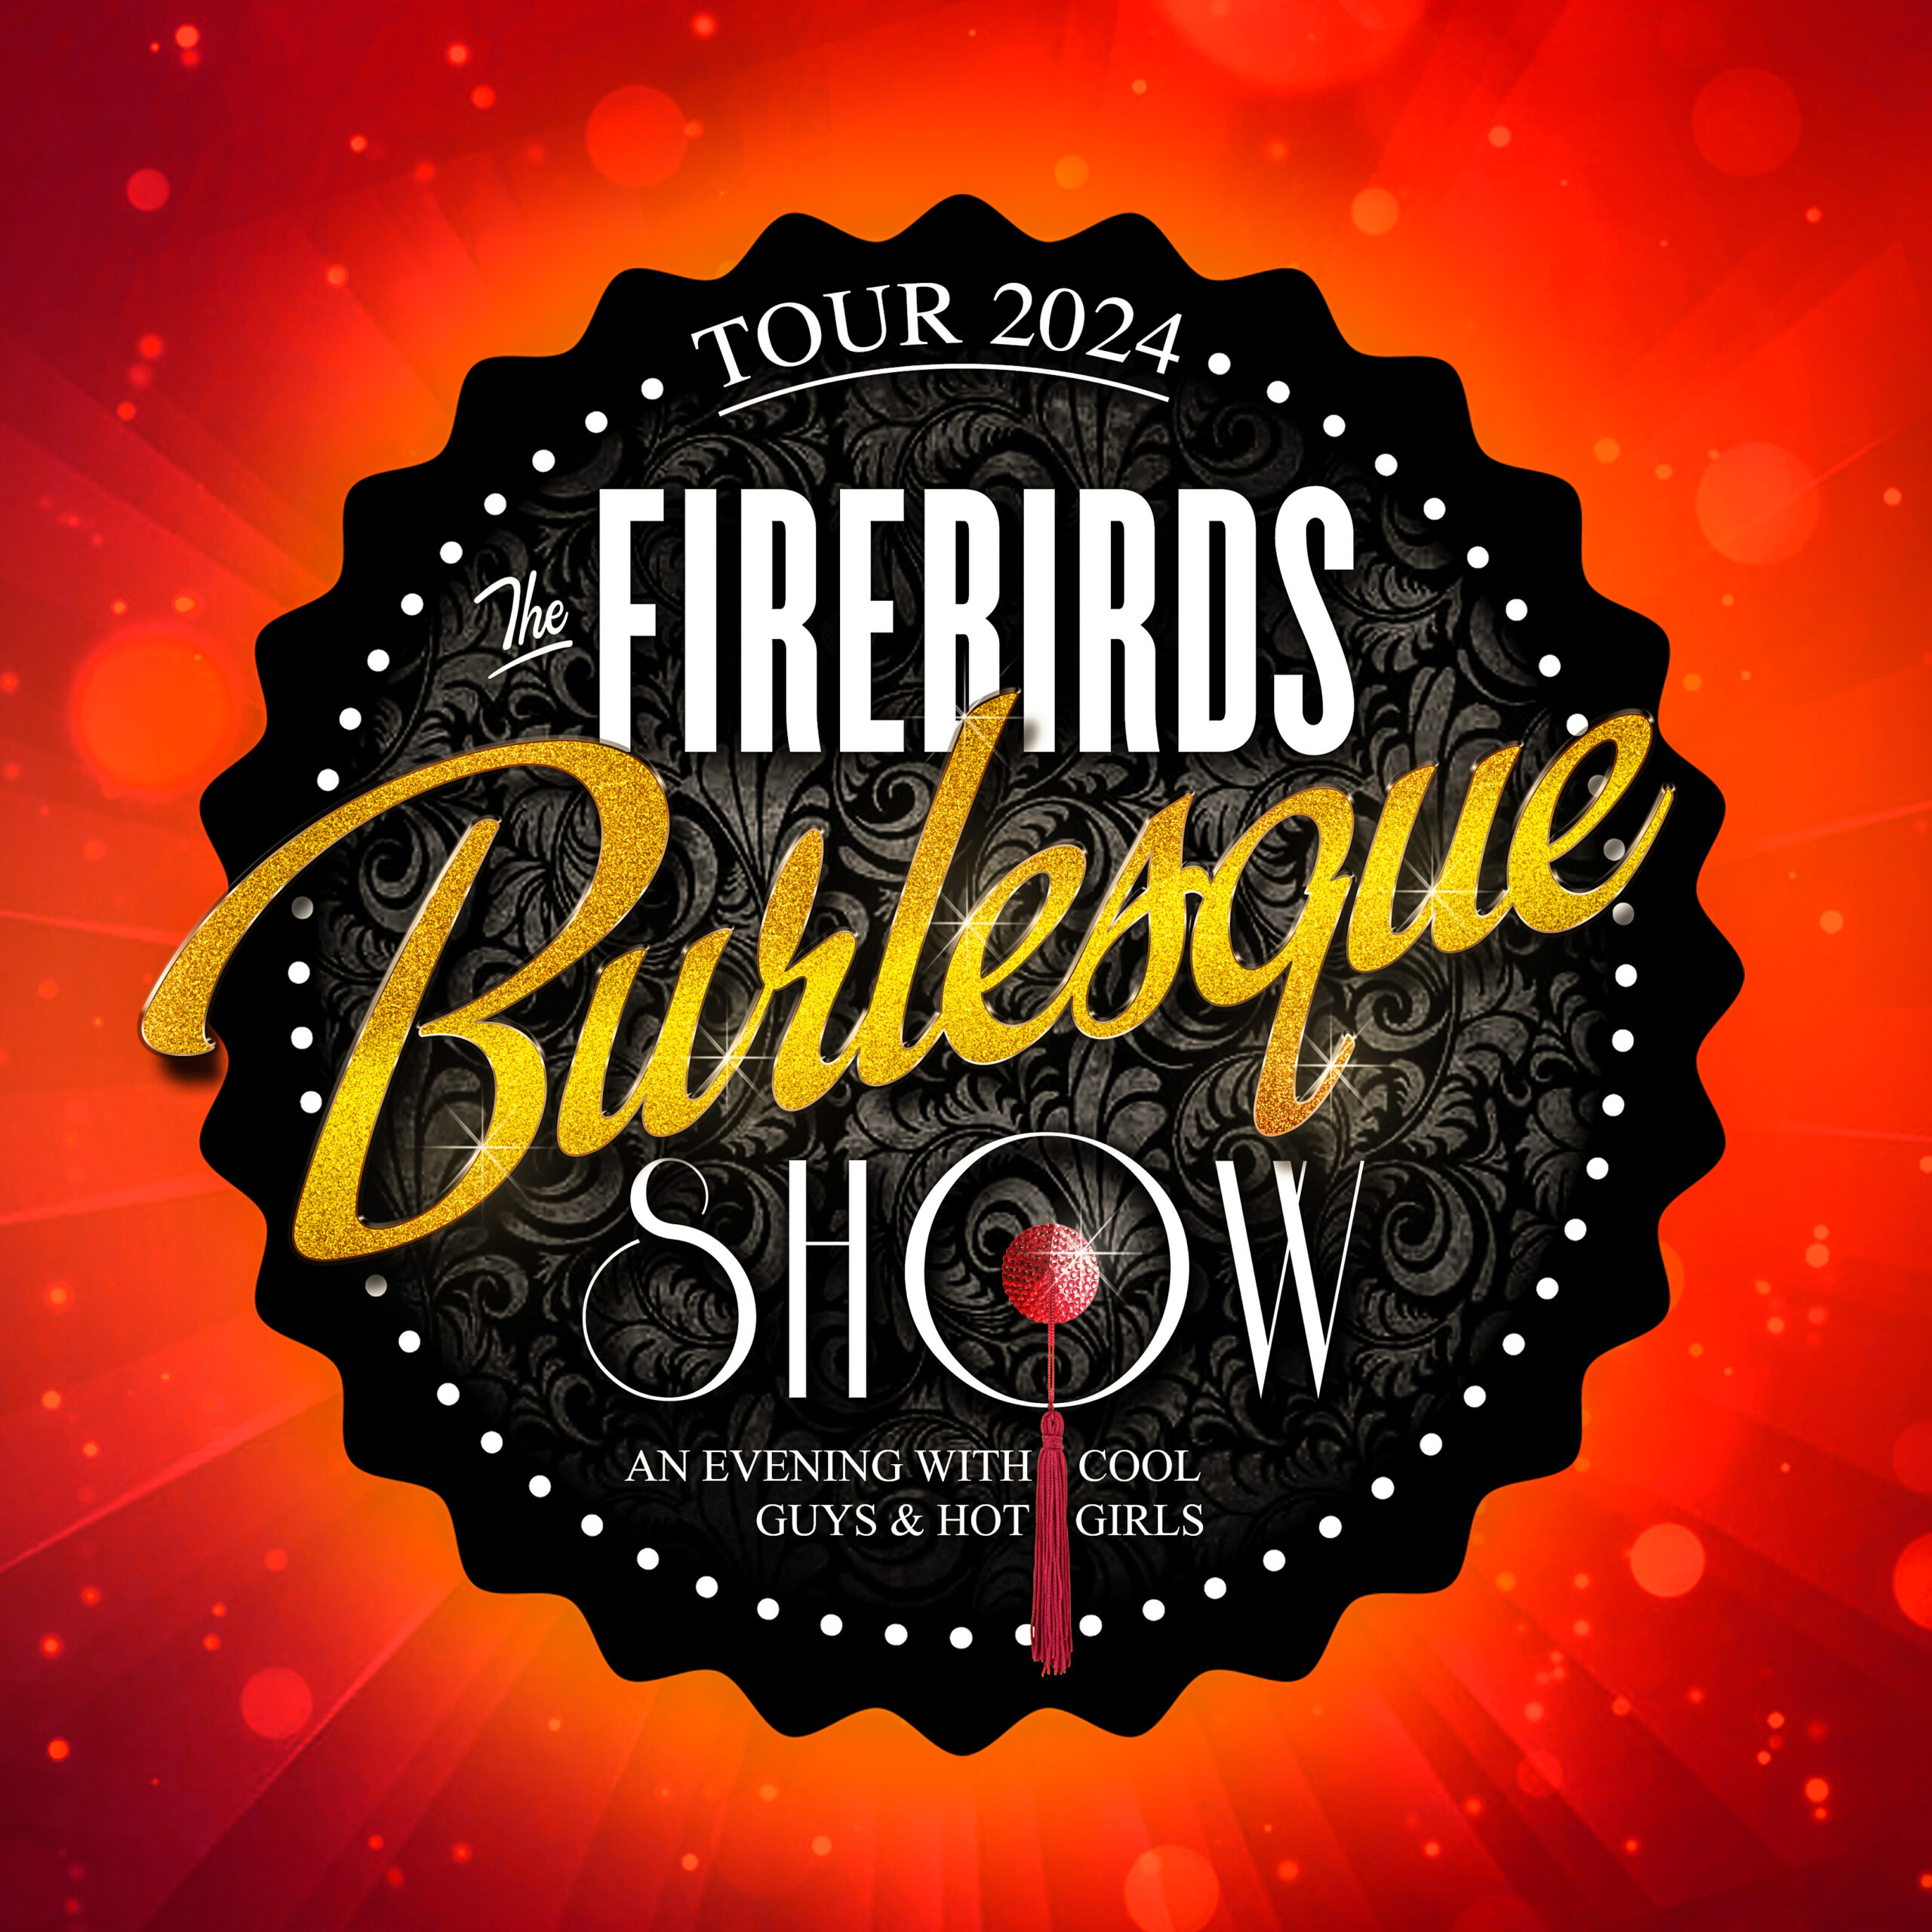 Firebirds BurlesqueShow